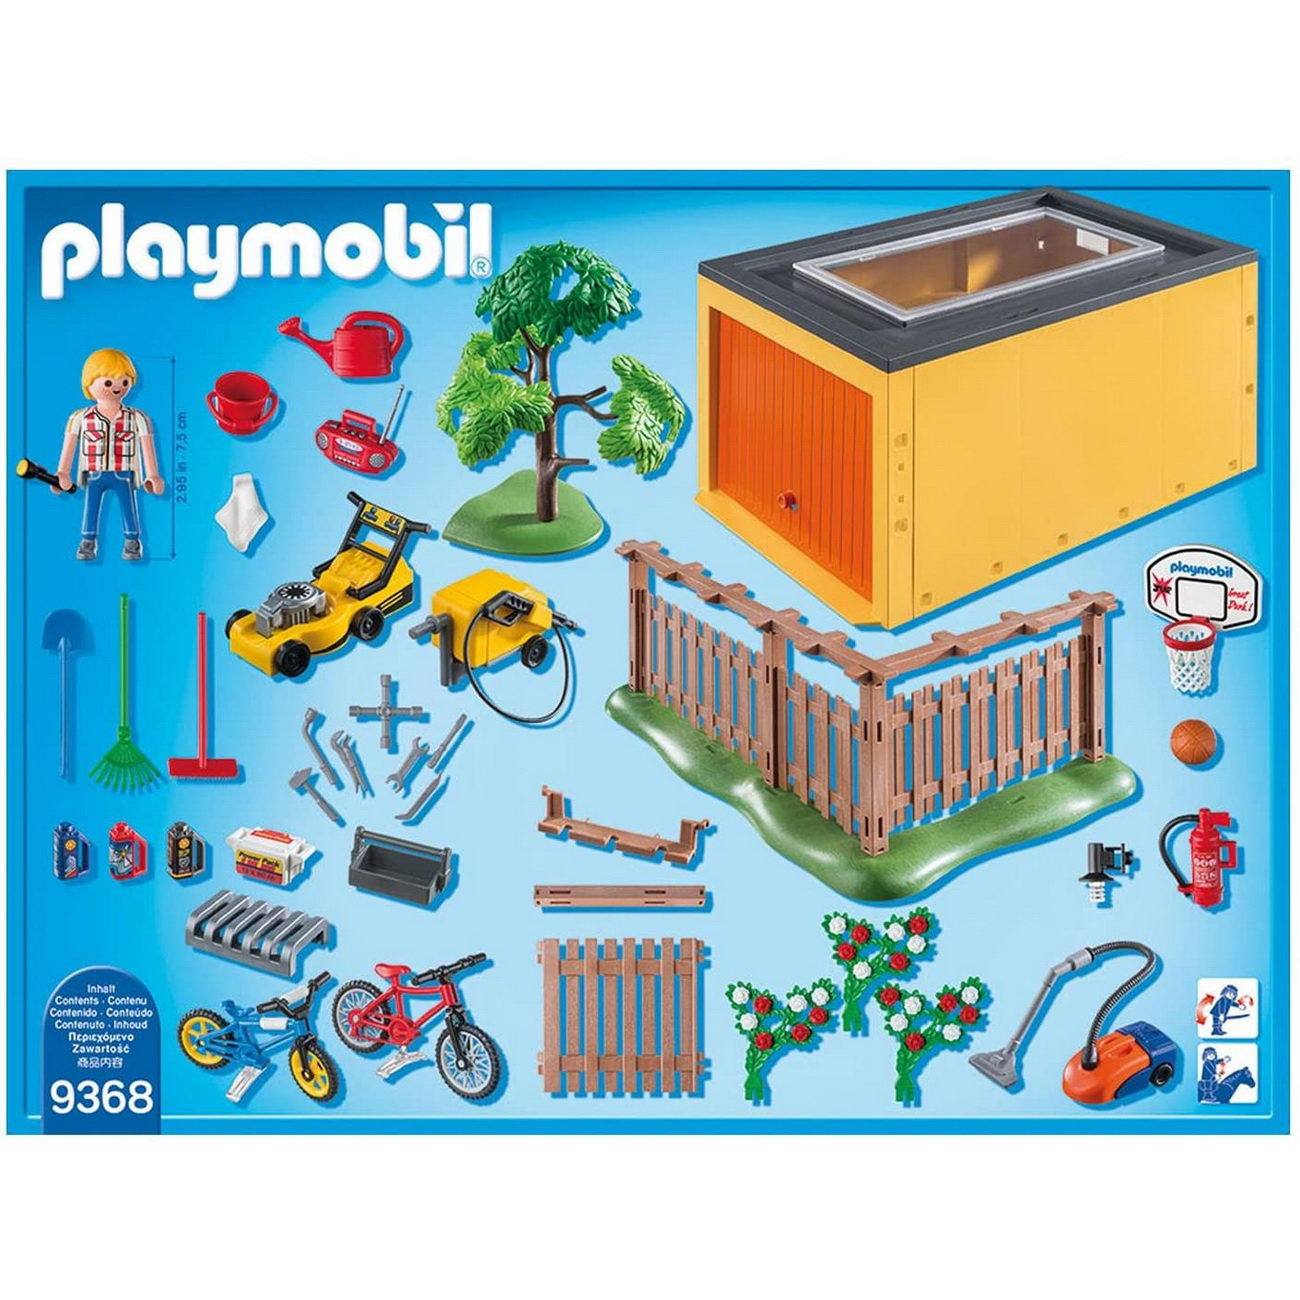 Playmobil 9368 - Garage mit Fahrradstellplatz (City Life)